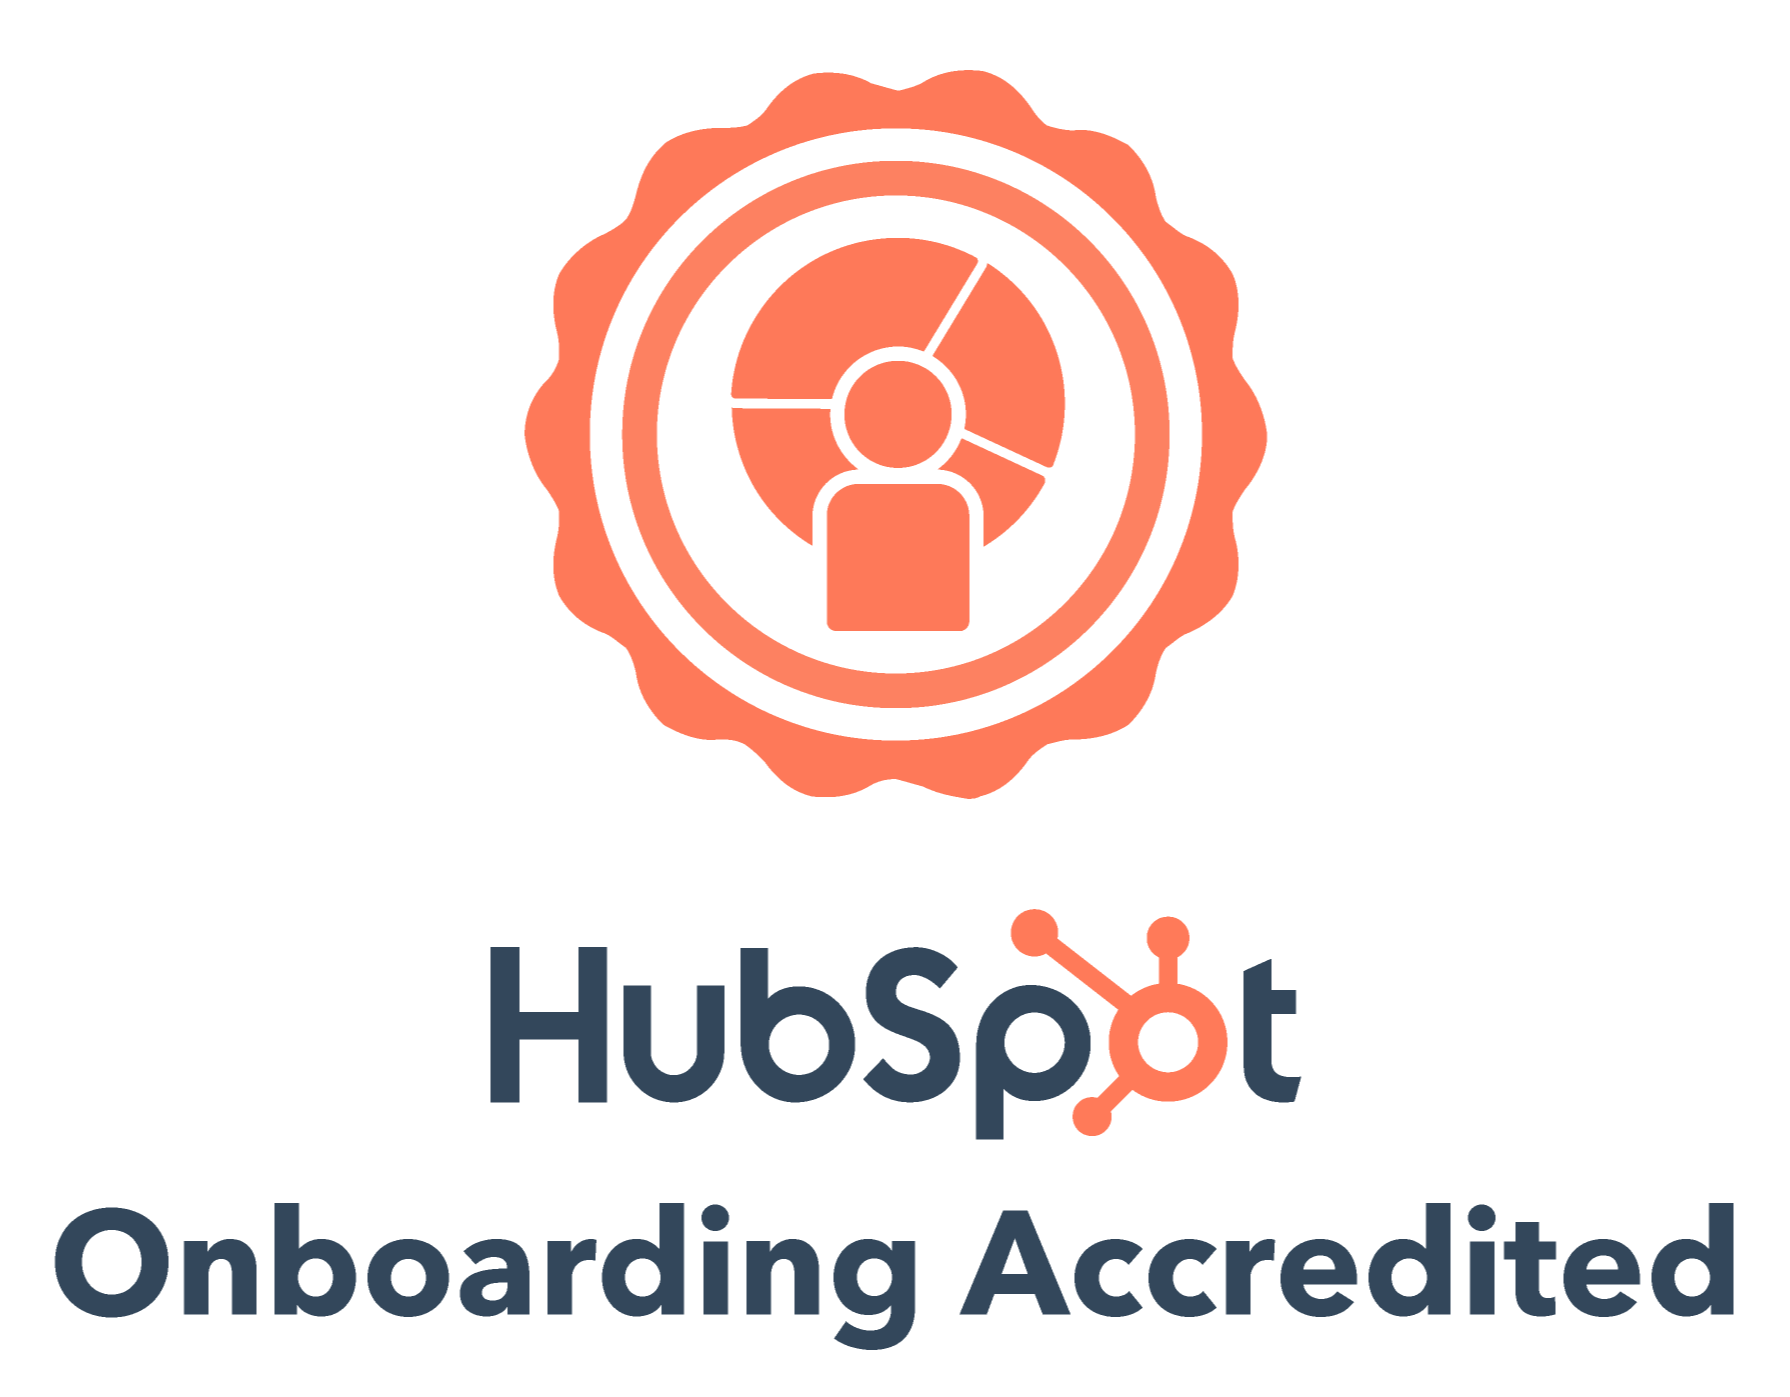 addmark hubspot onboarding accredited